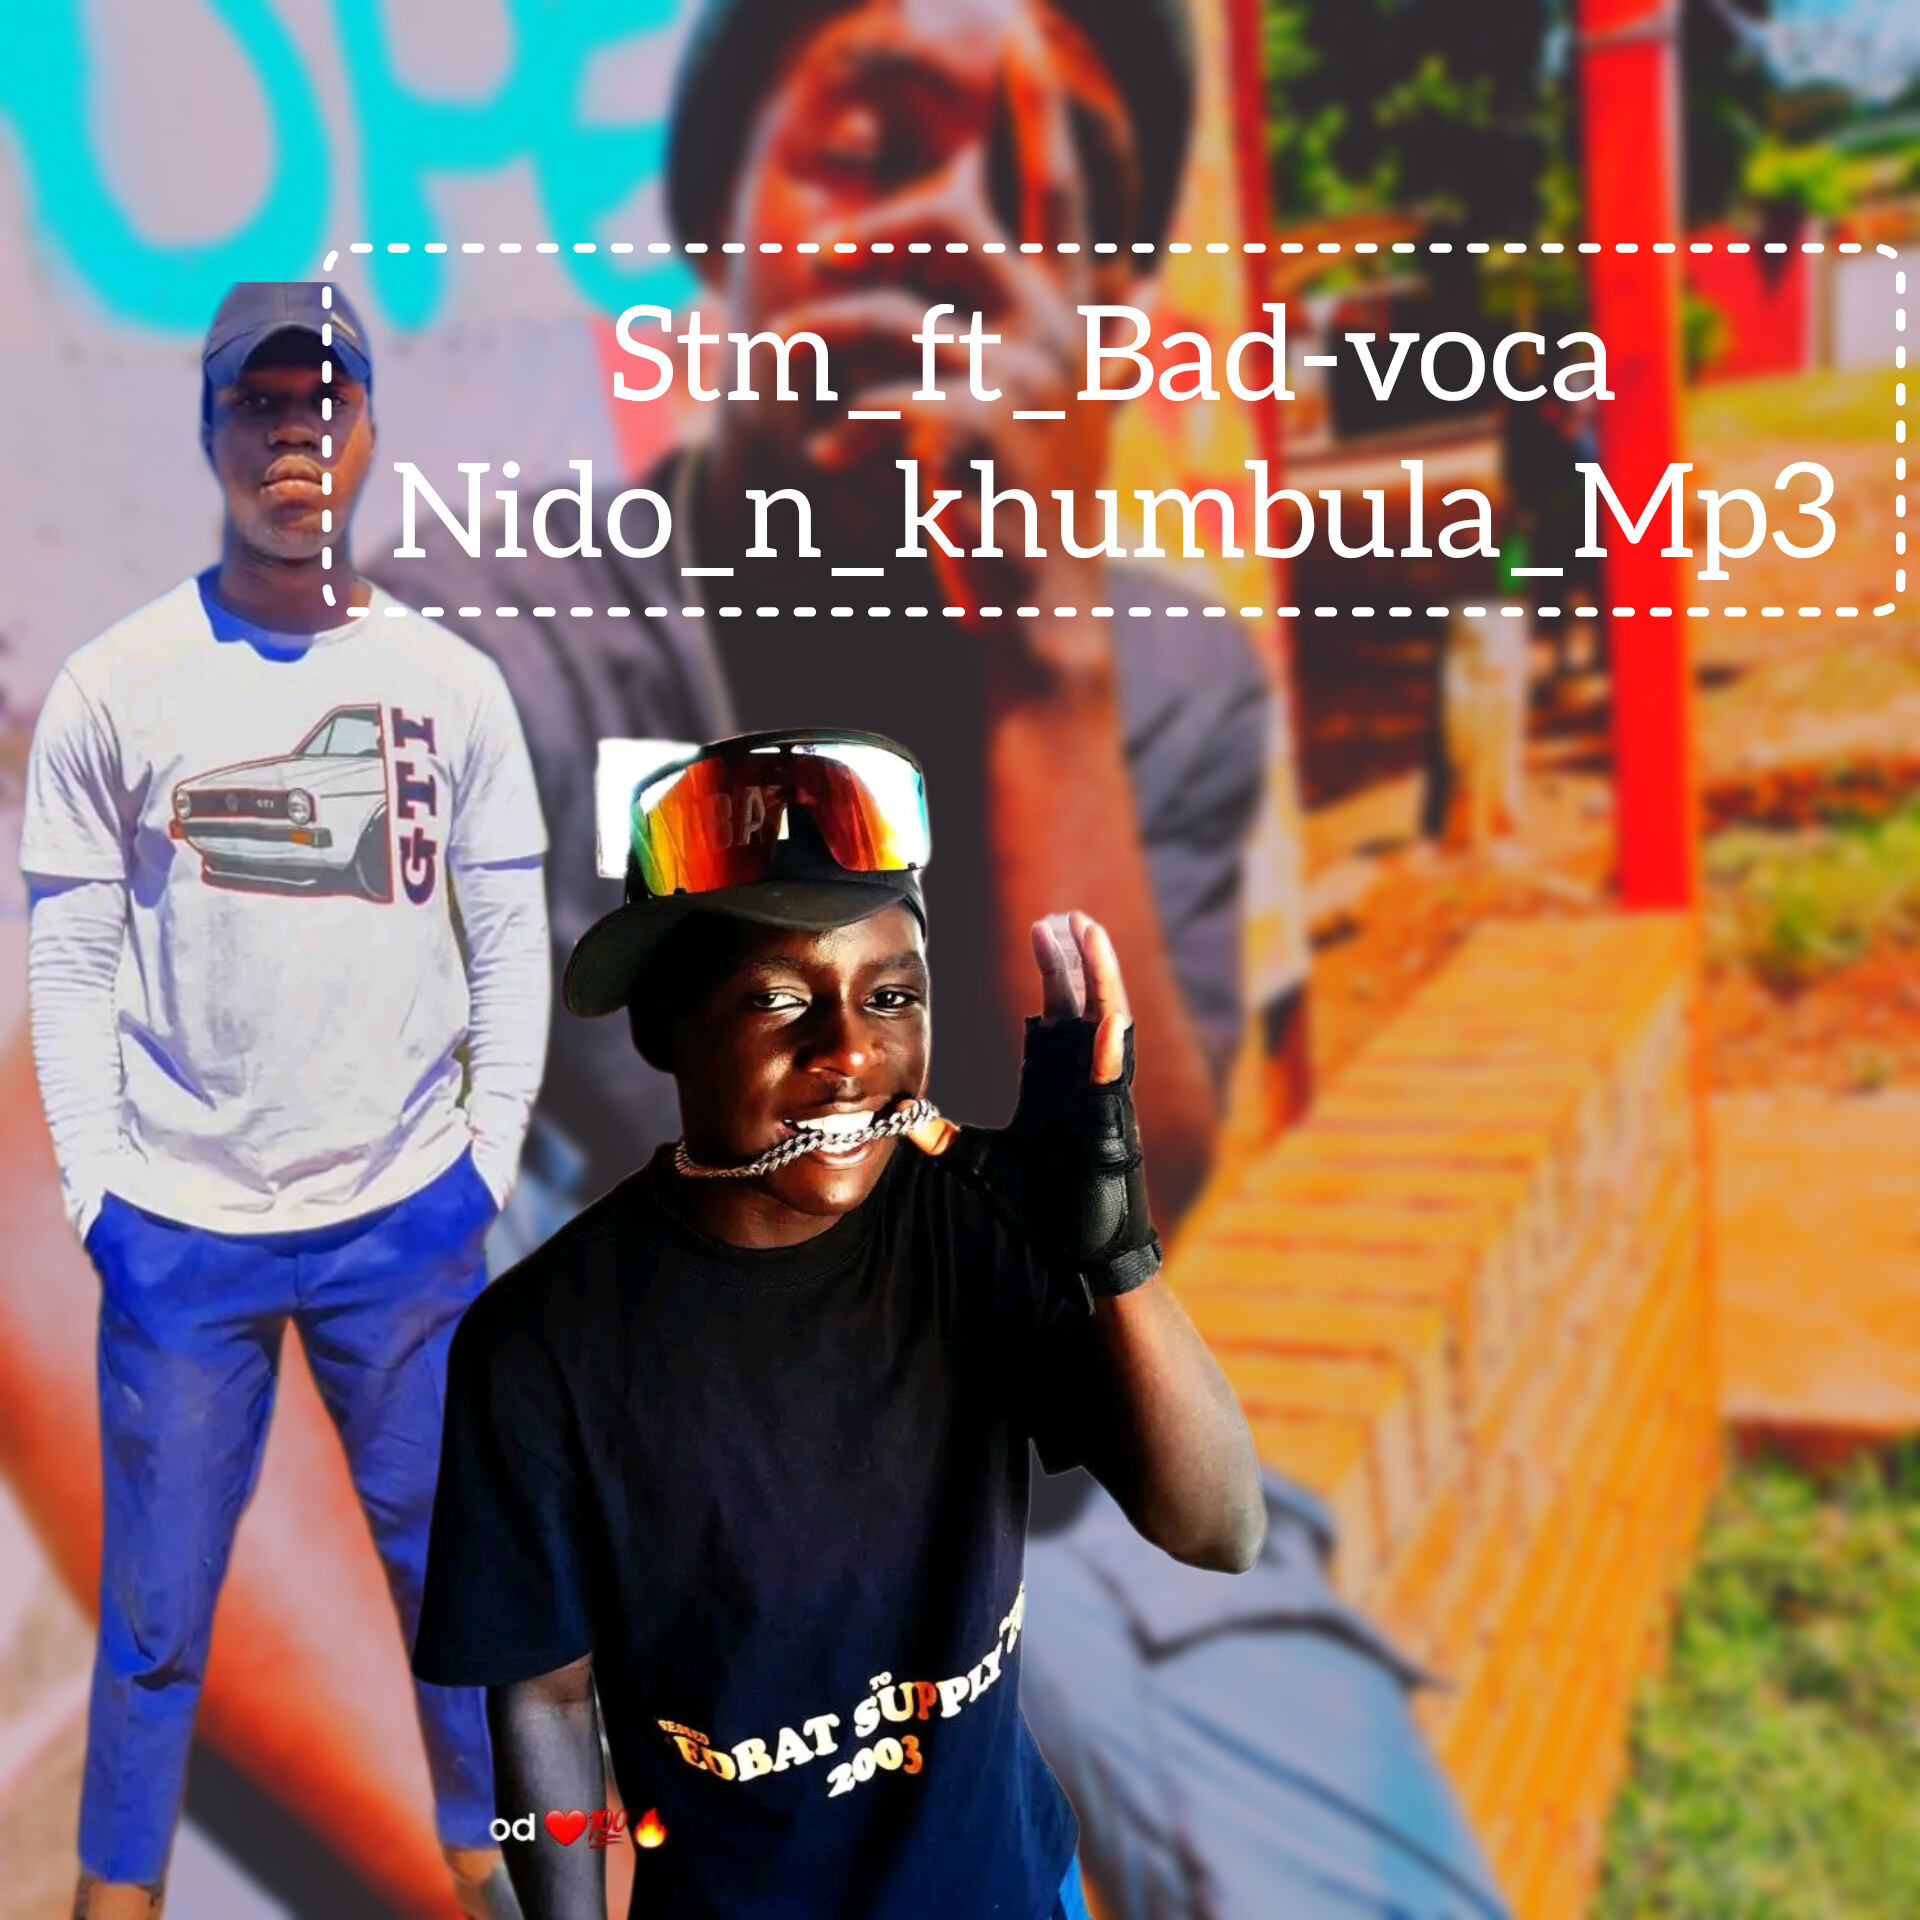 Nido-nkhumbula - Stm_&_Bad-Voca